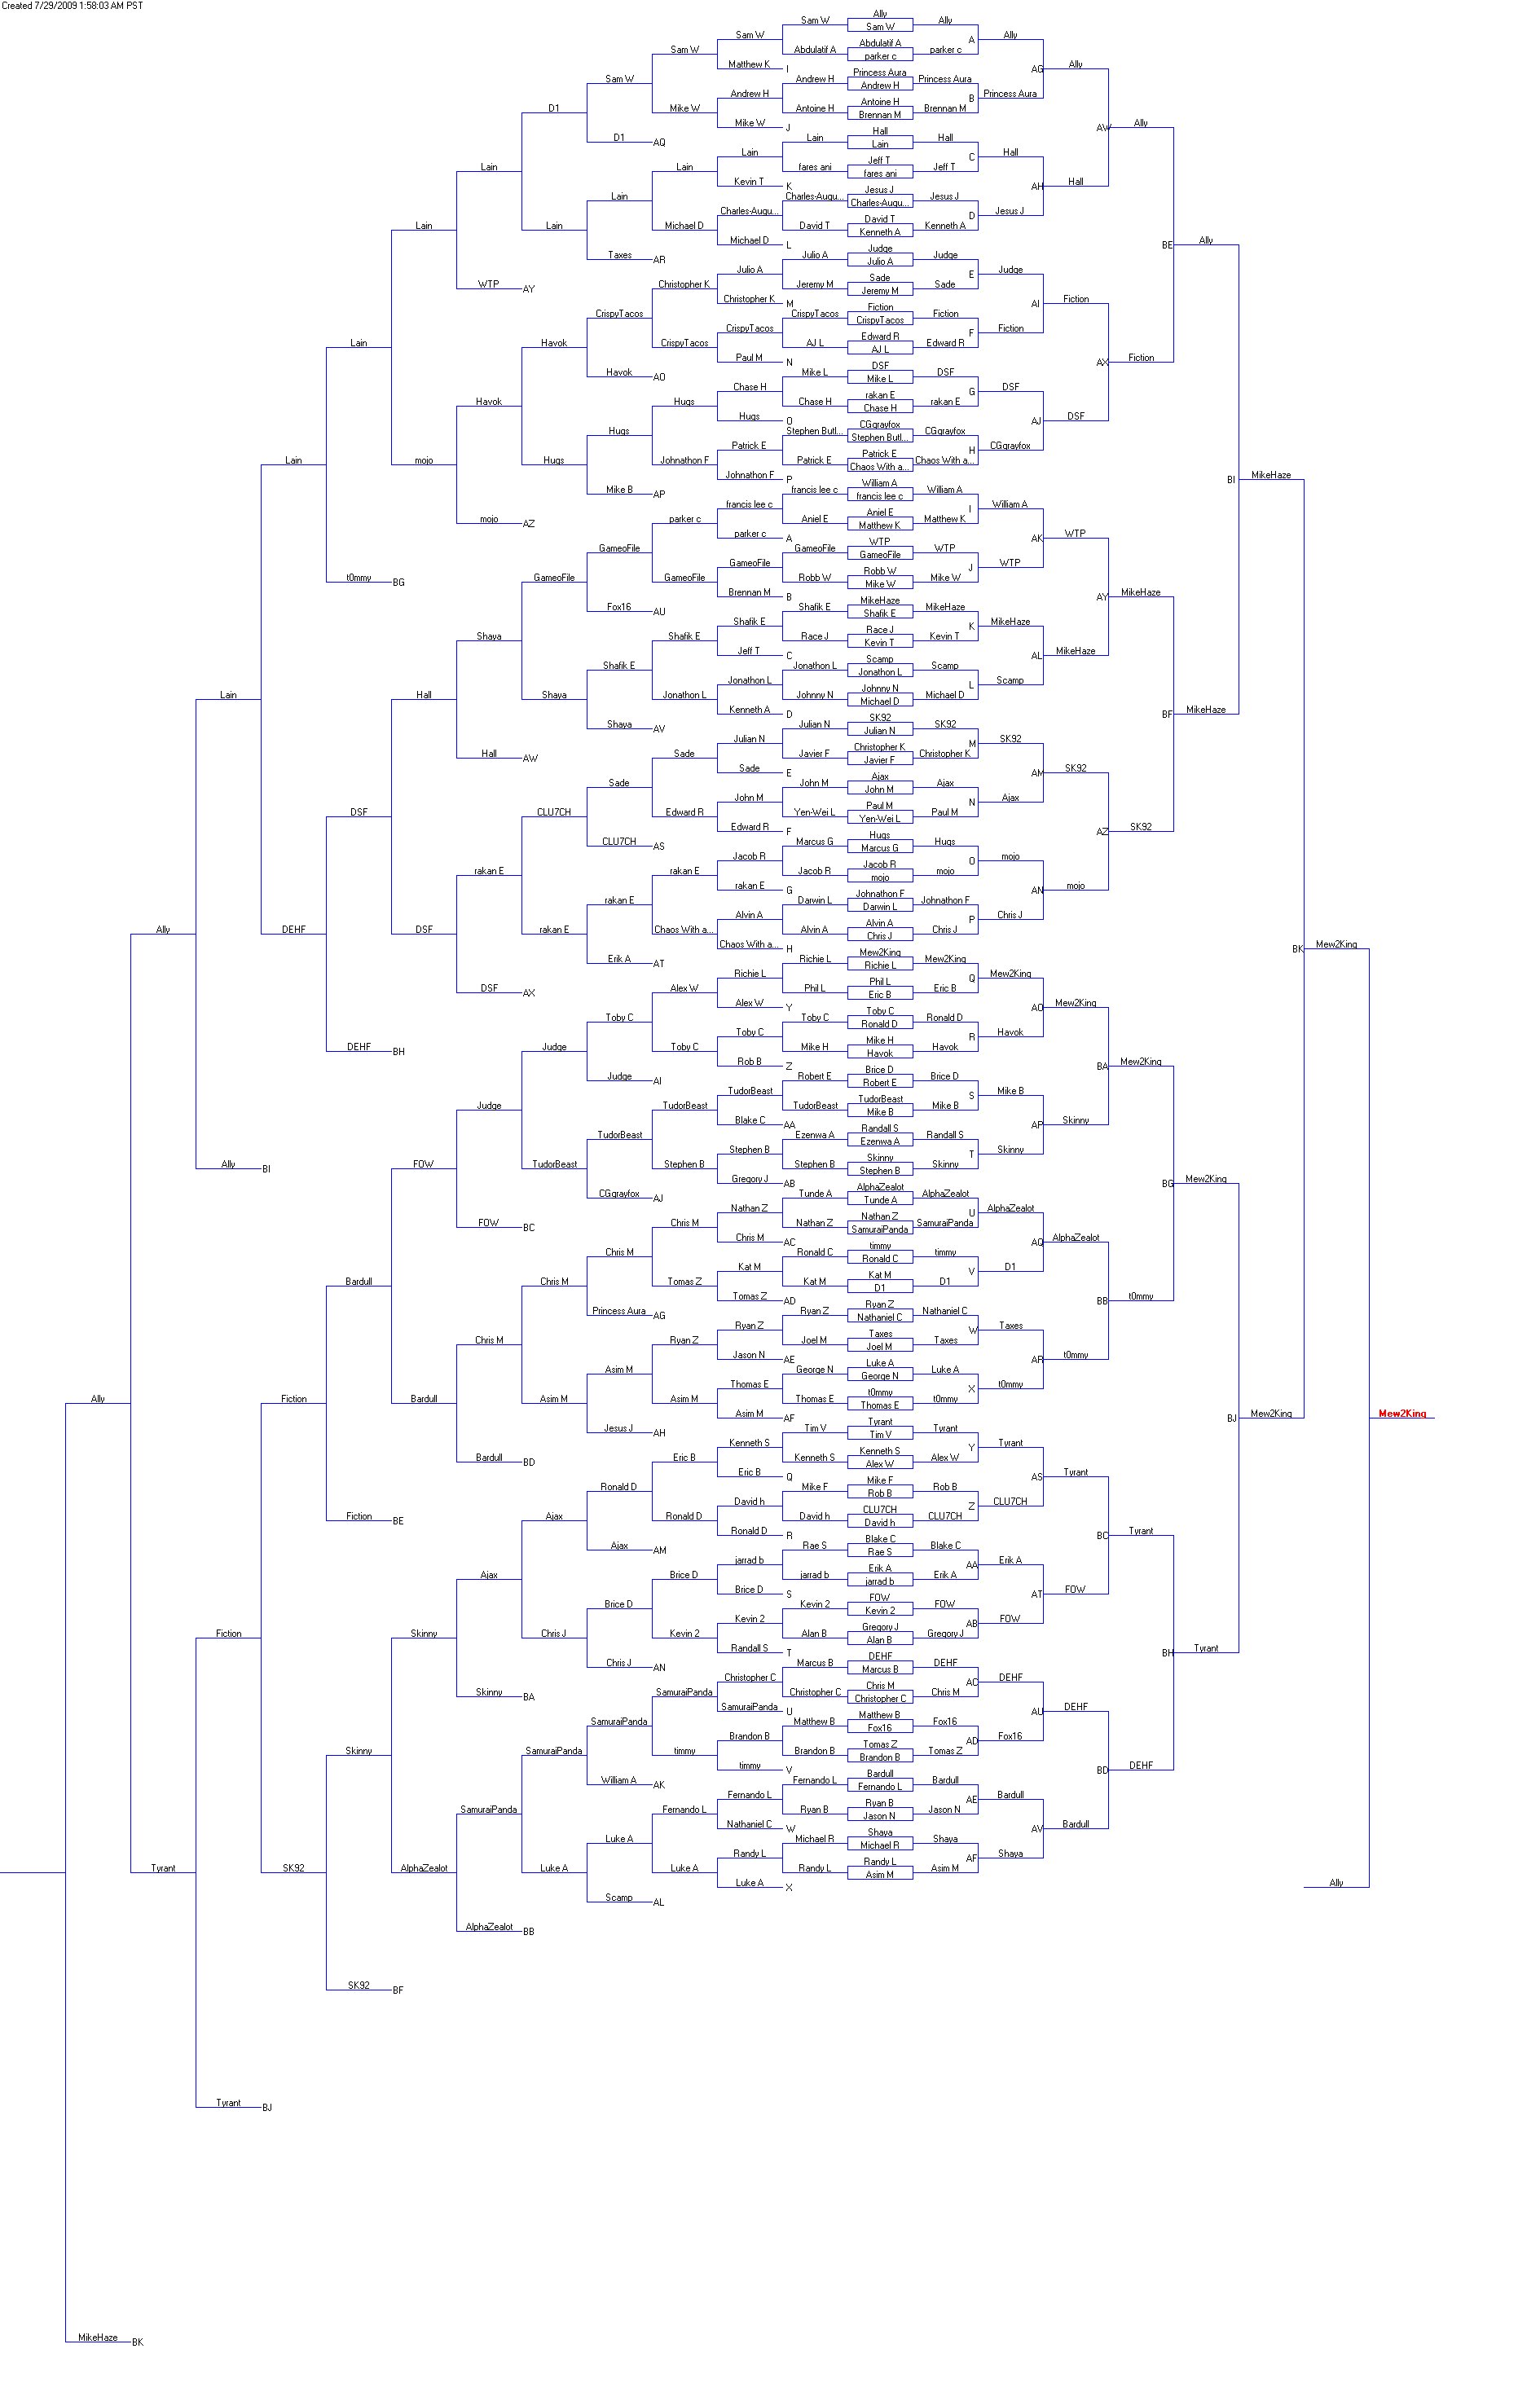 Evolution Championship Series, 2009: Brawl Singles